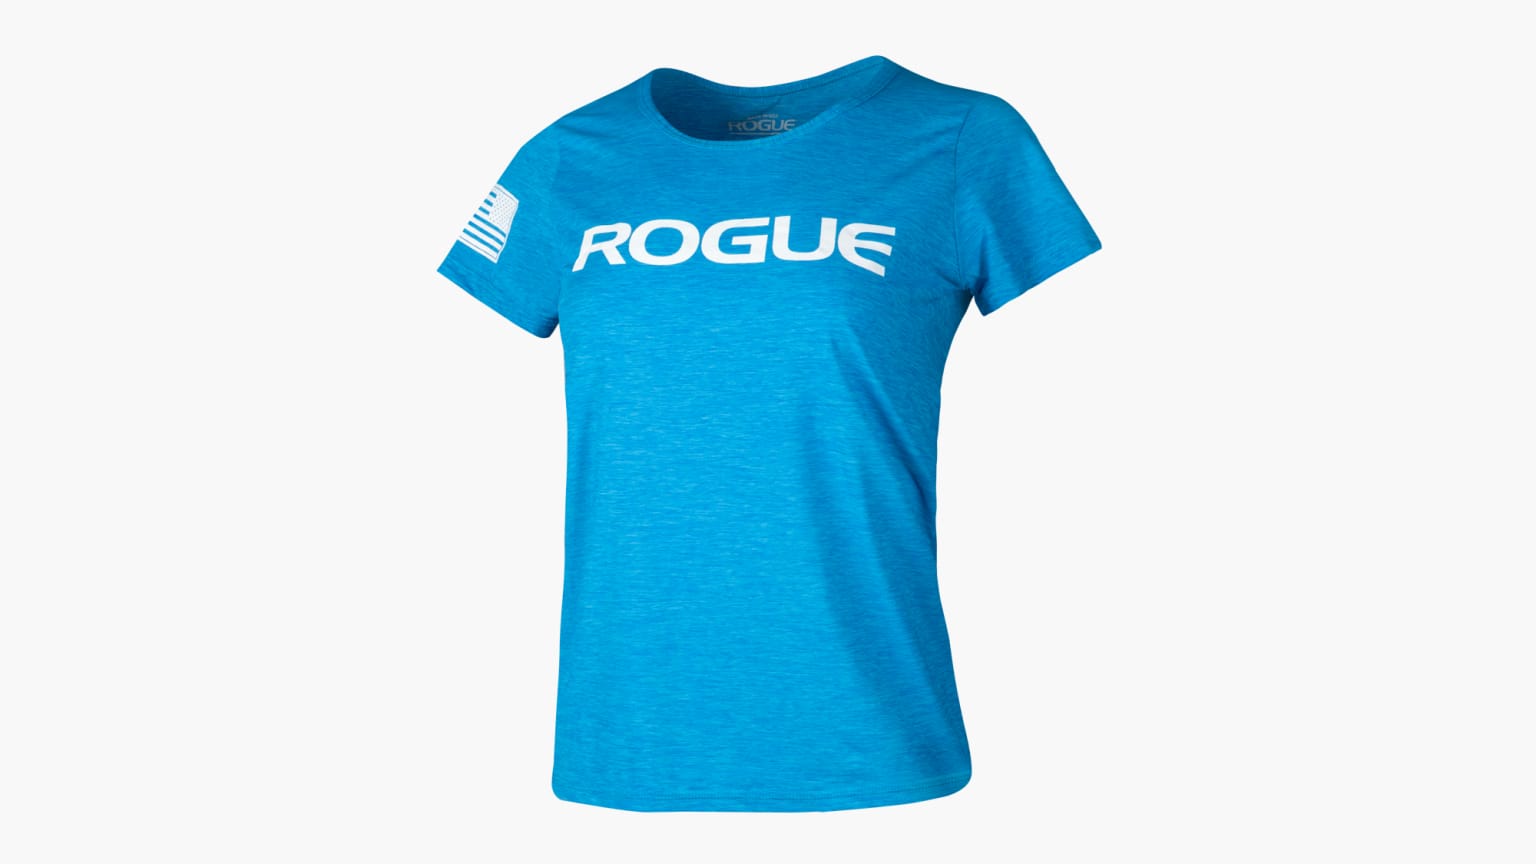 Rogue Women's Performance Sun Shirt - Heather Blue / White | Rogue